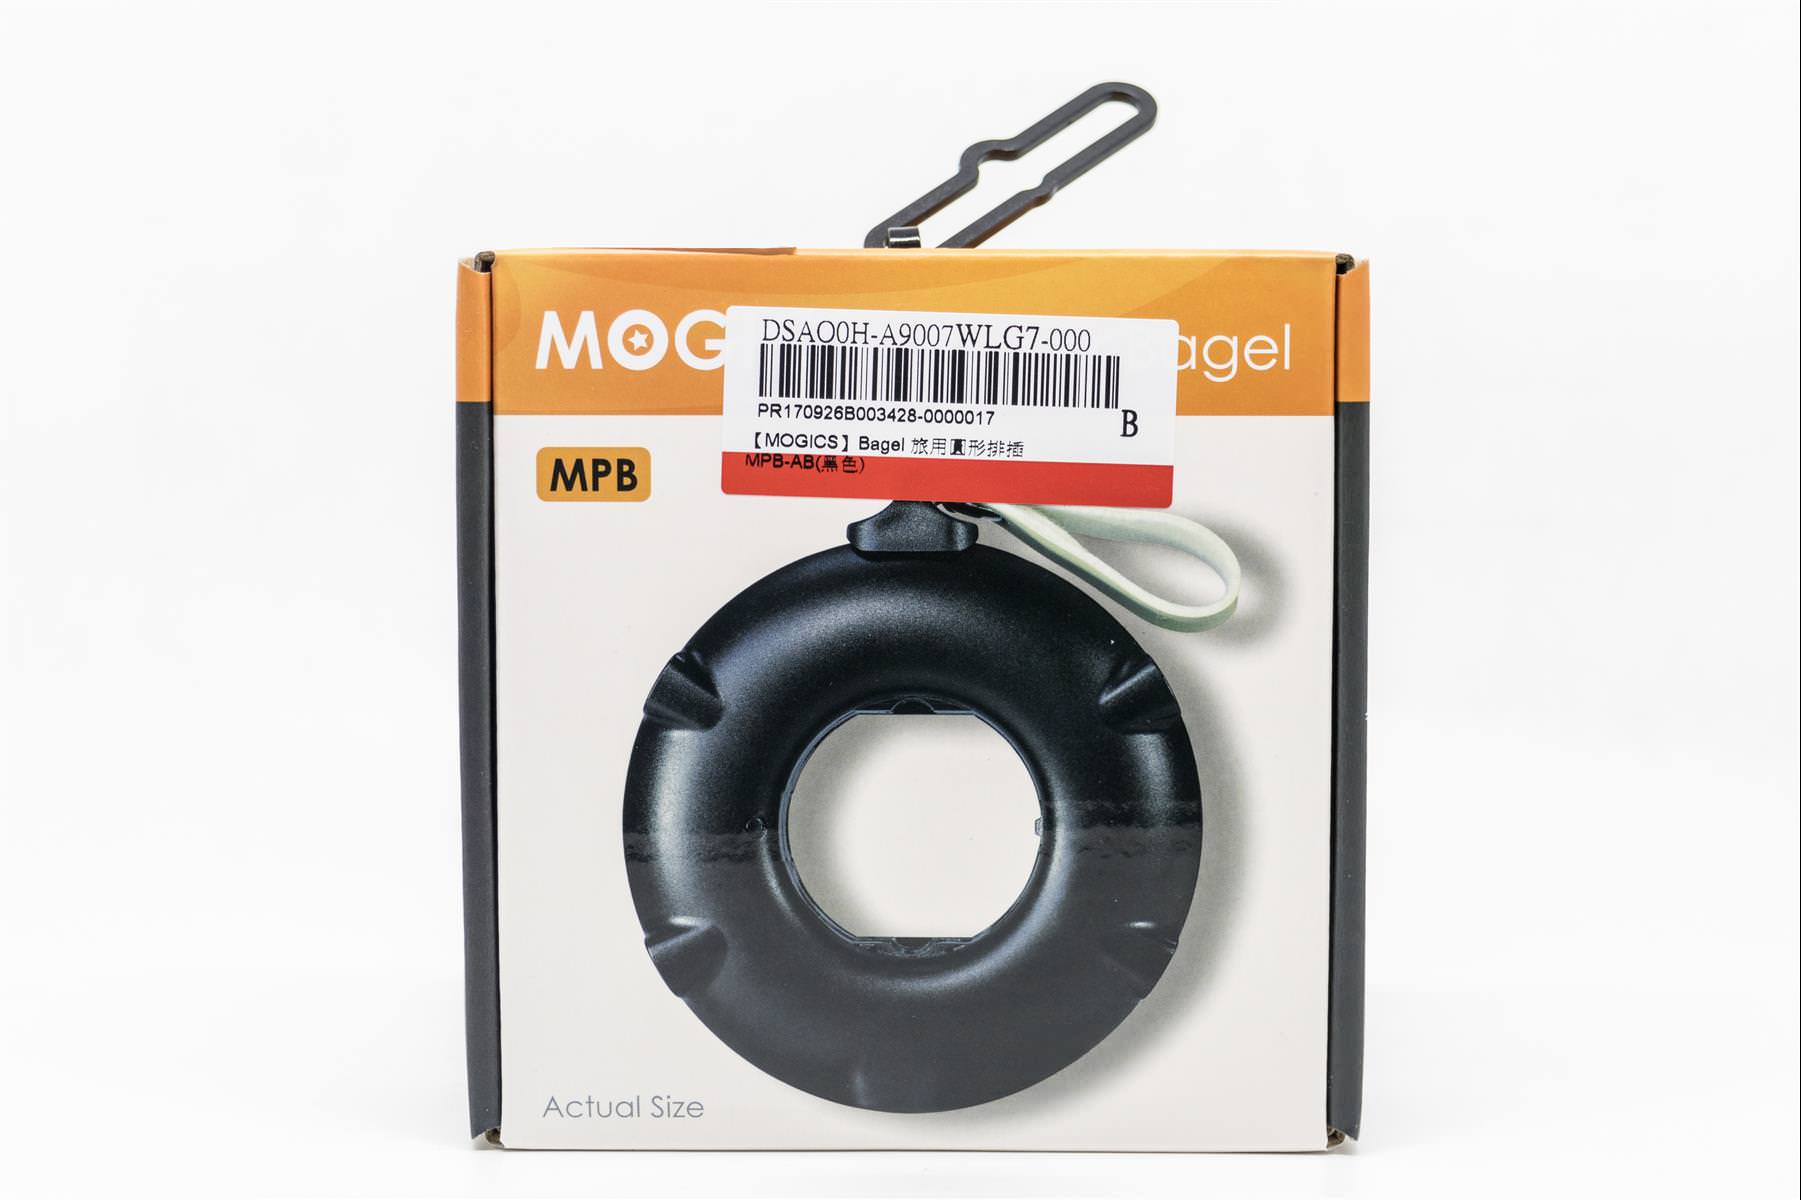 [3C 開箱] MOGICS Power Bagel 旅用圓形排插 , 非常聰明、實用的出國旅行伙伴